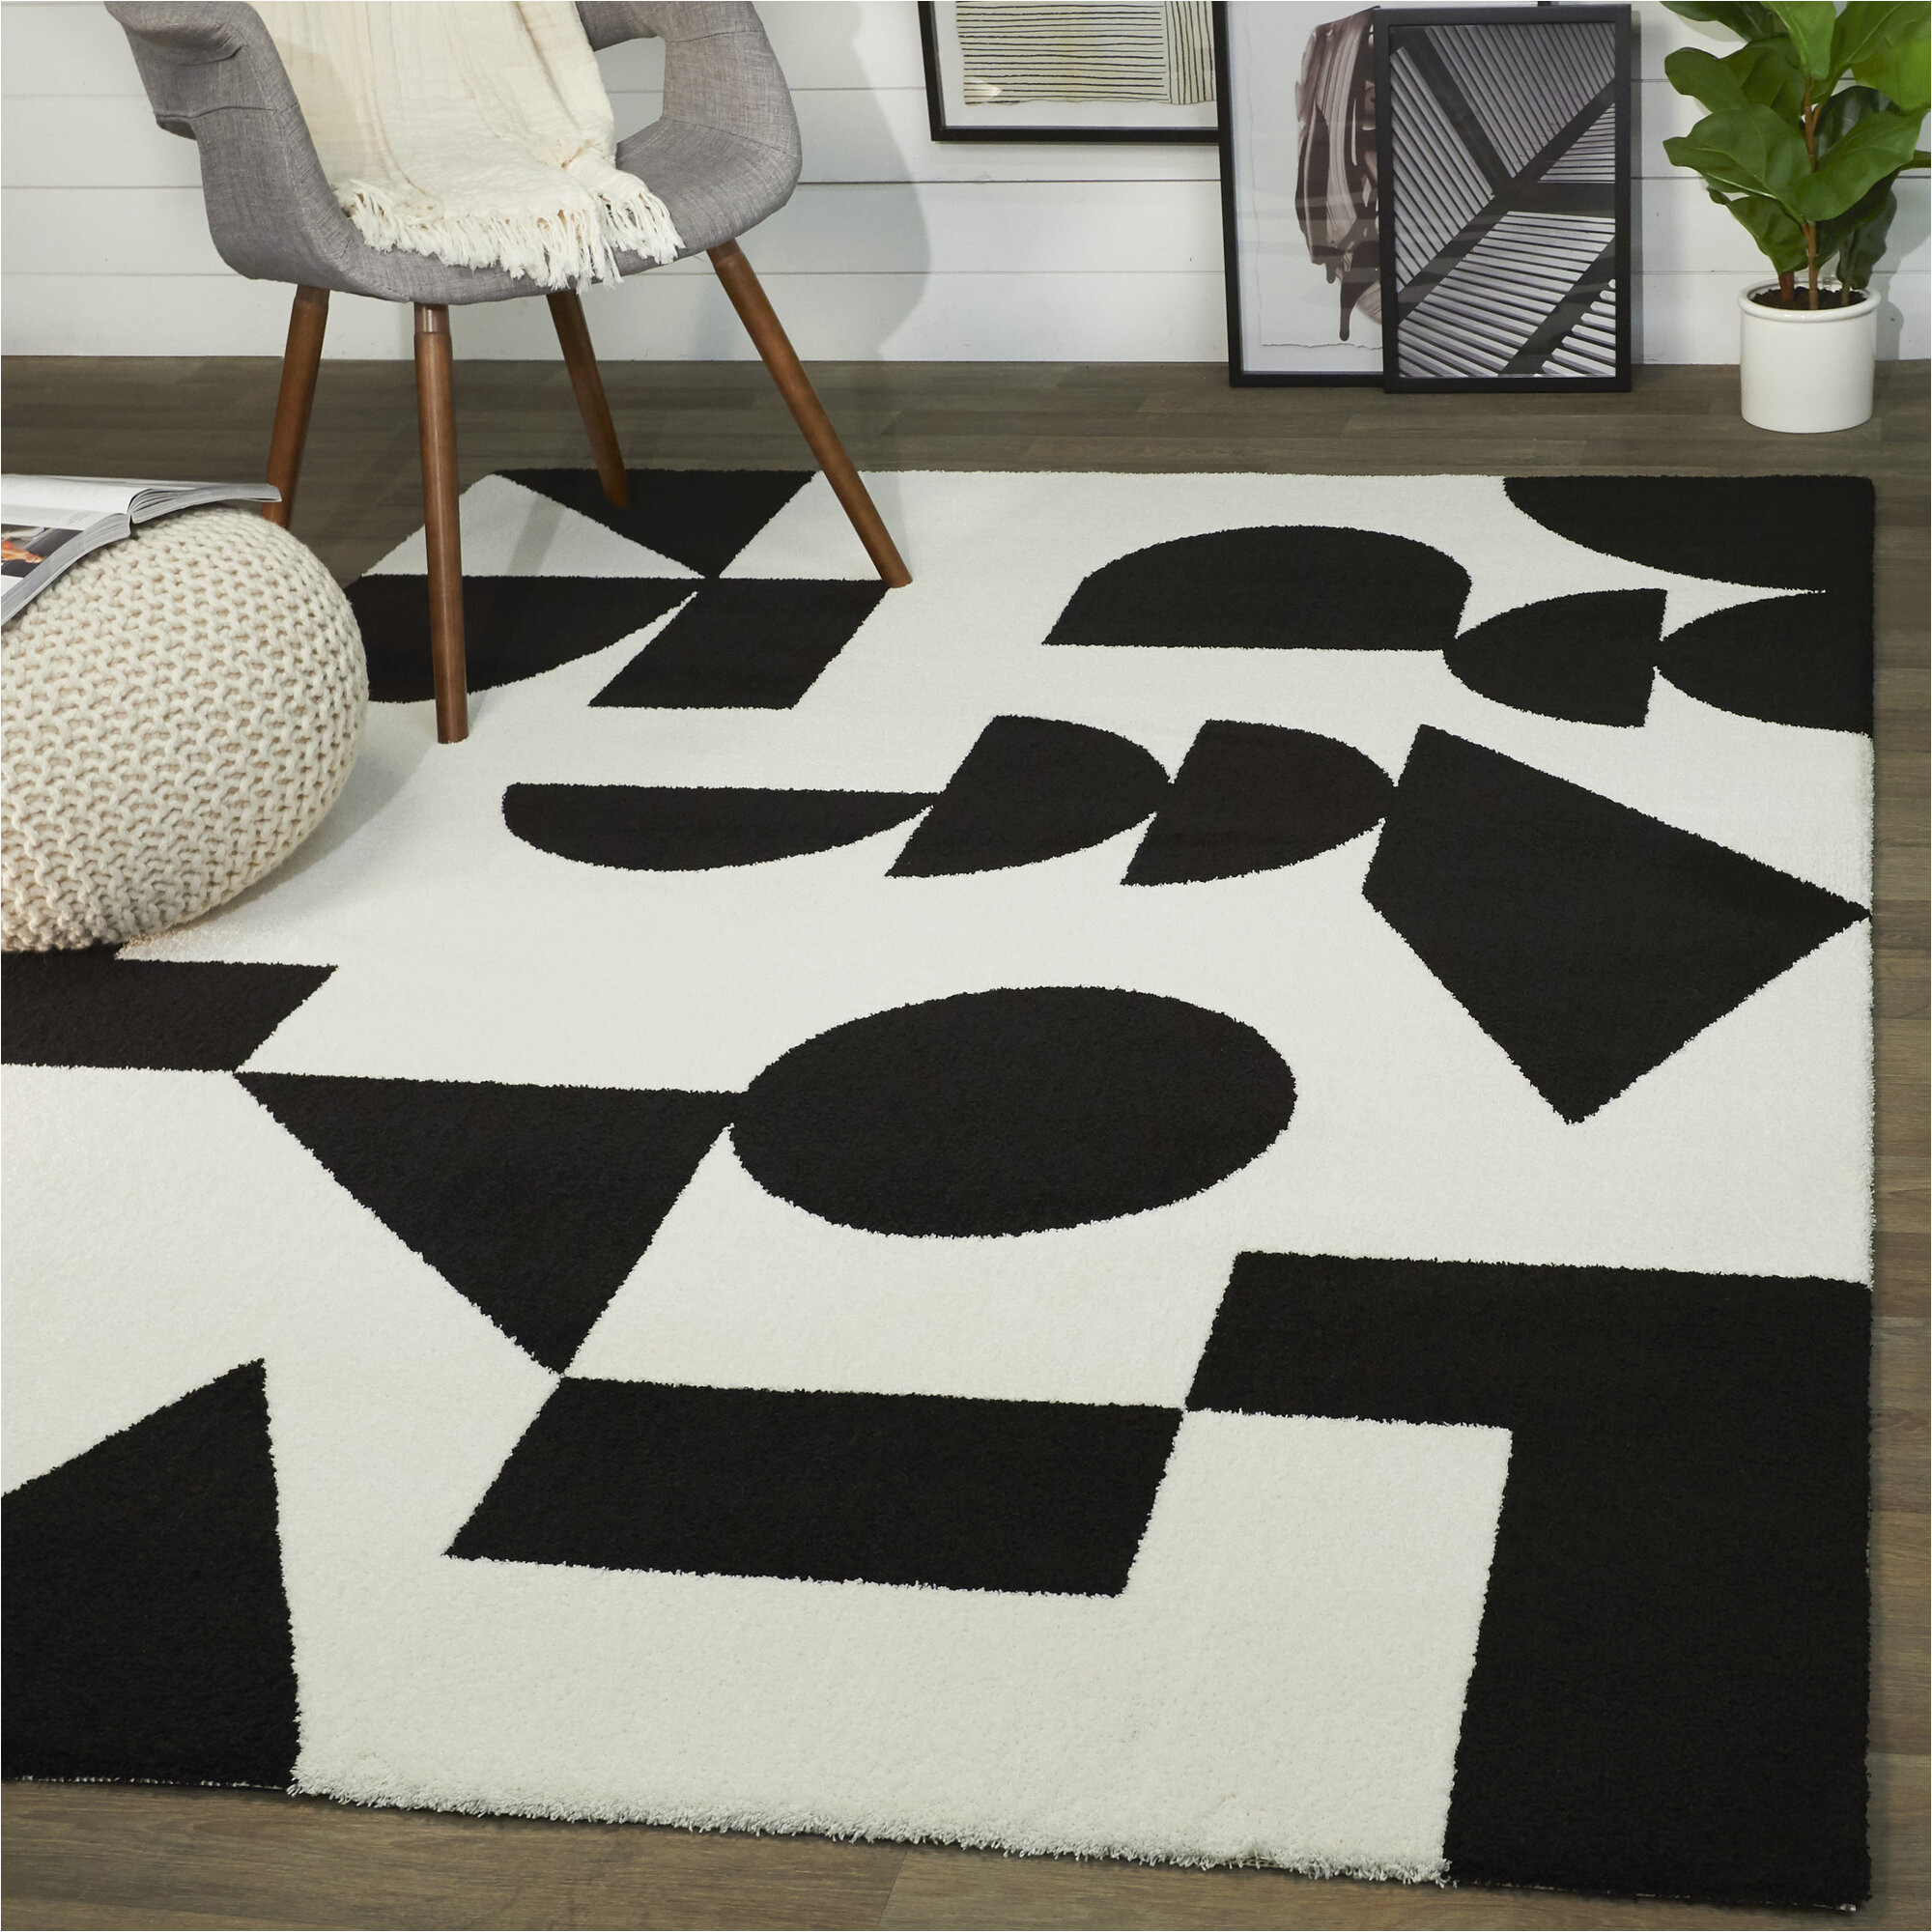 corrigan studio palmerston geometric blackwhite area rug w ml